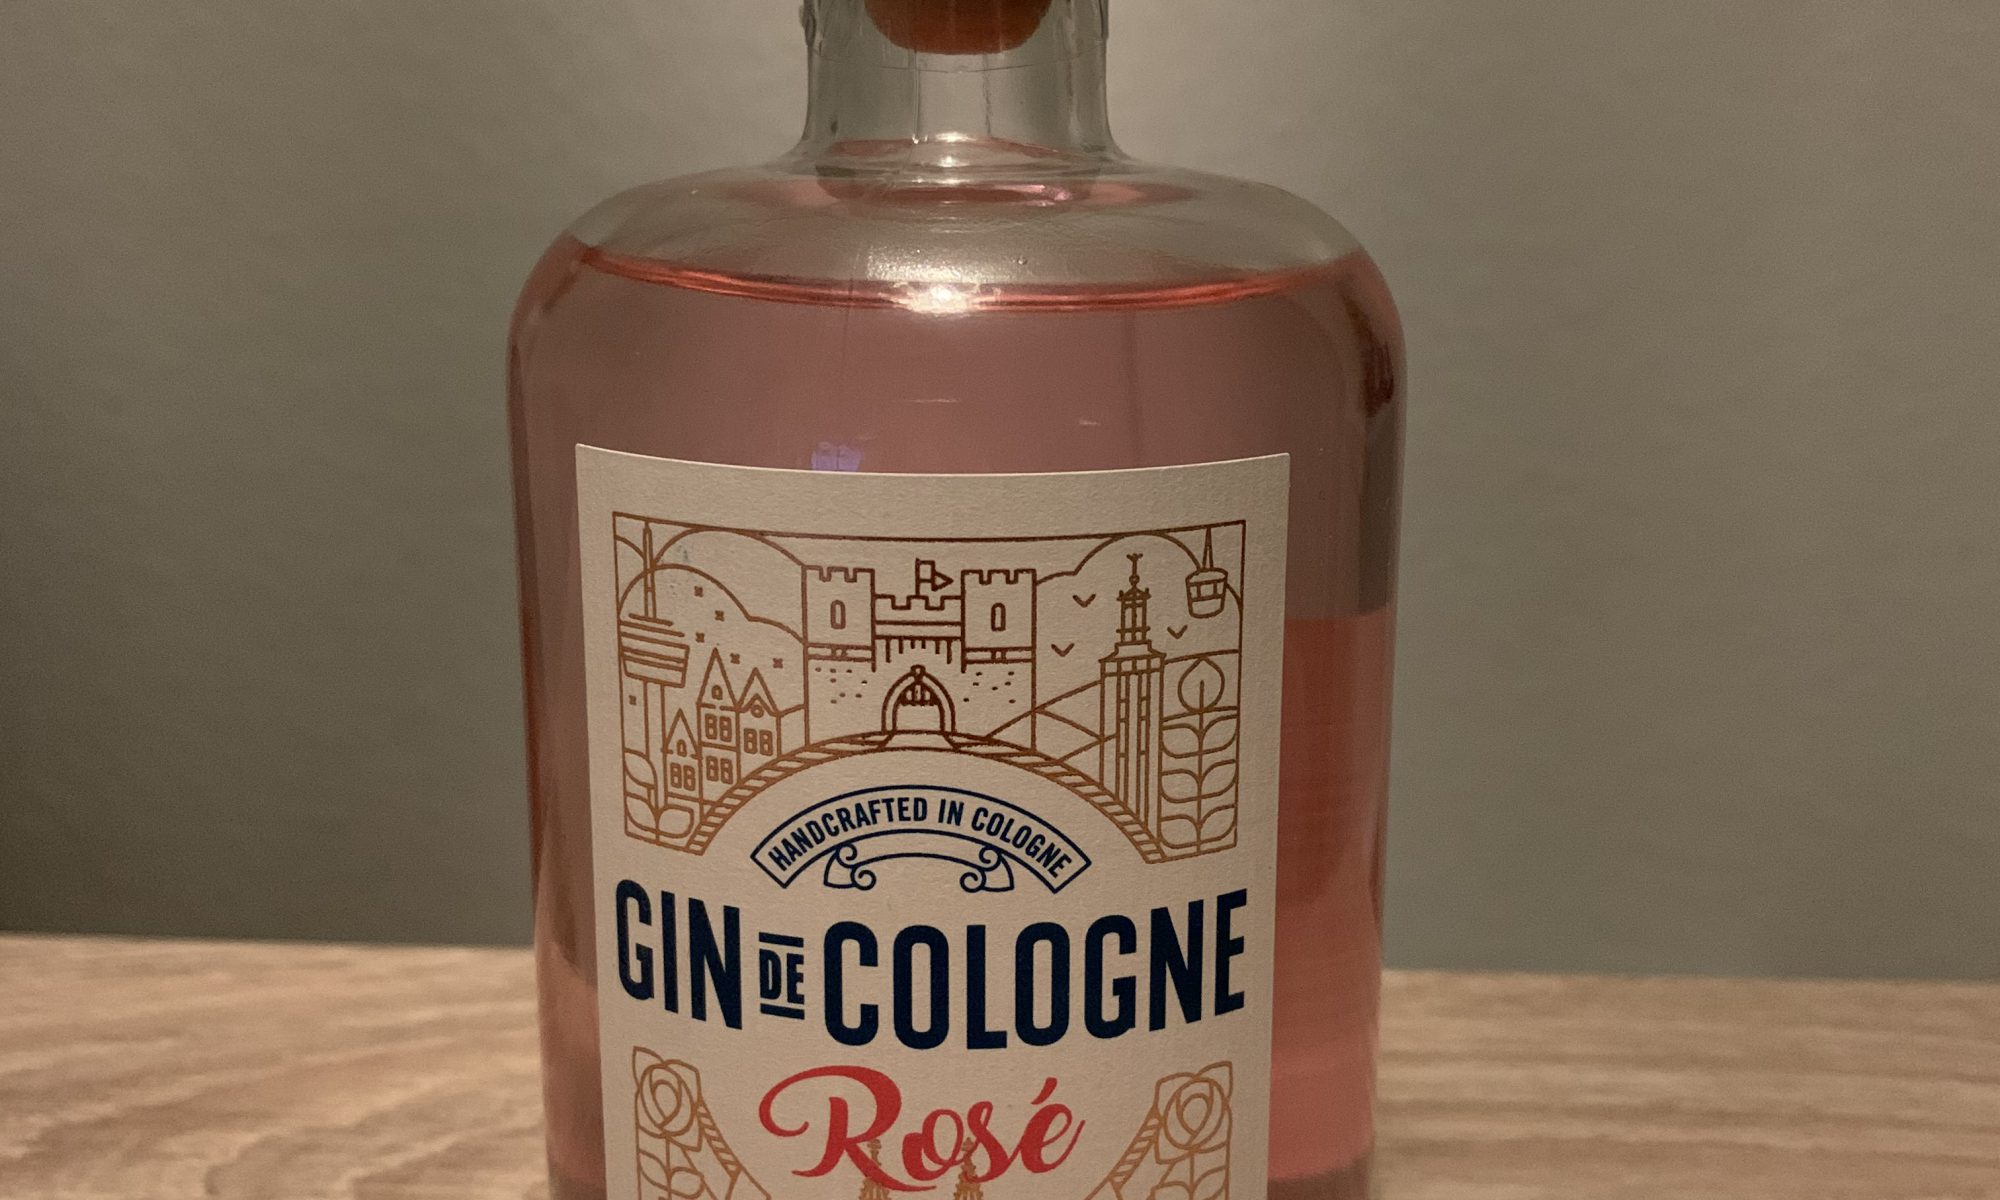 Gin de Cologne Rose